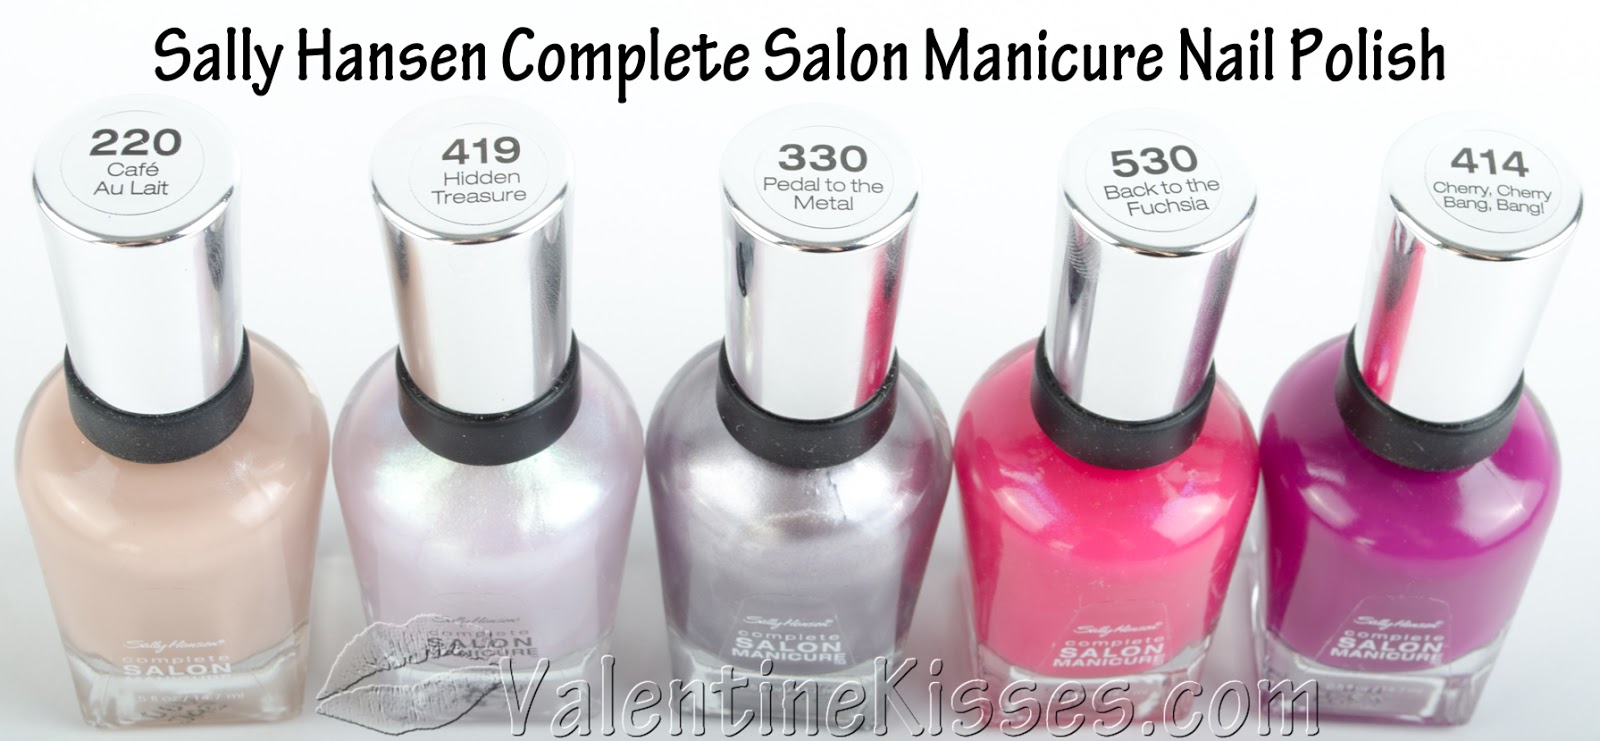 10. Sally Hansen Complete Salon Manicure Nail Polish - Pat on the Black - wide 9